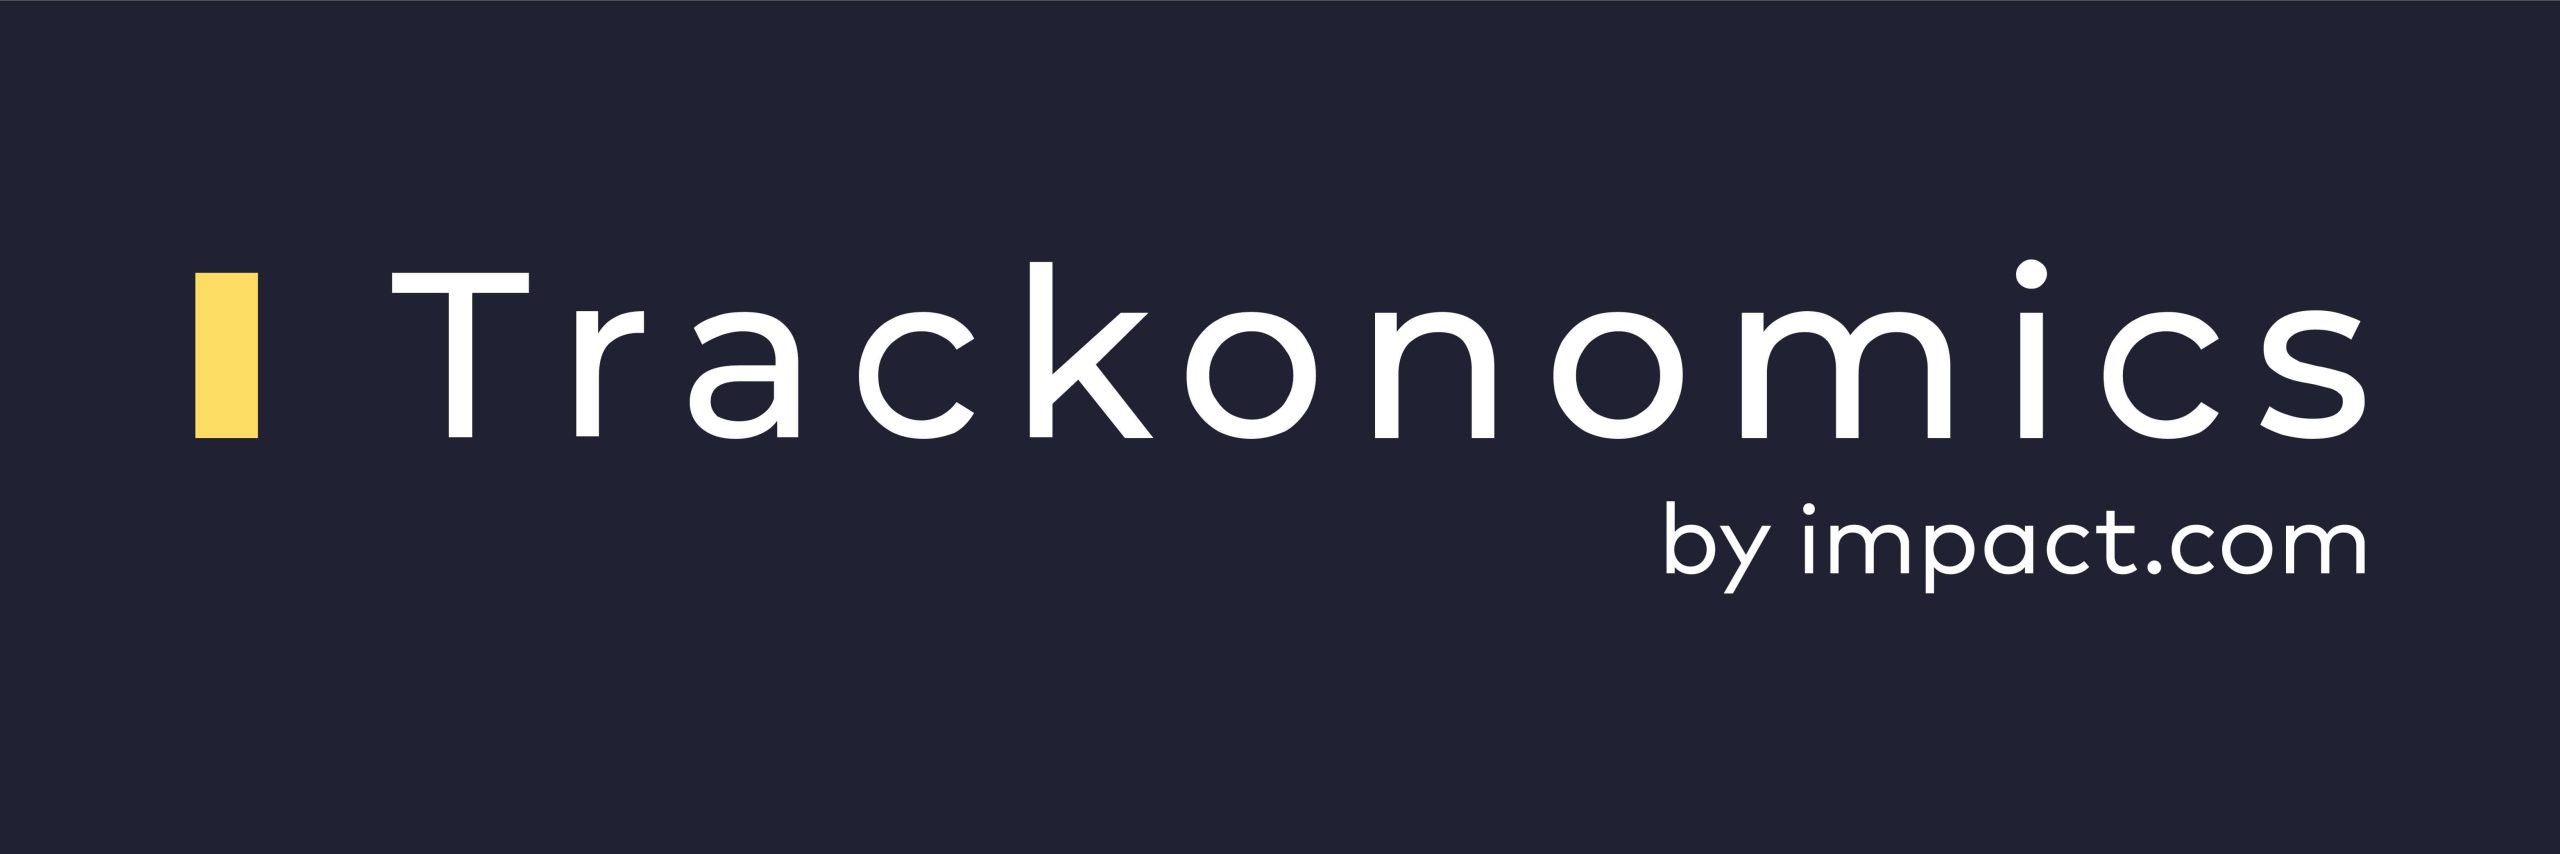 Trackonomics Logo